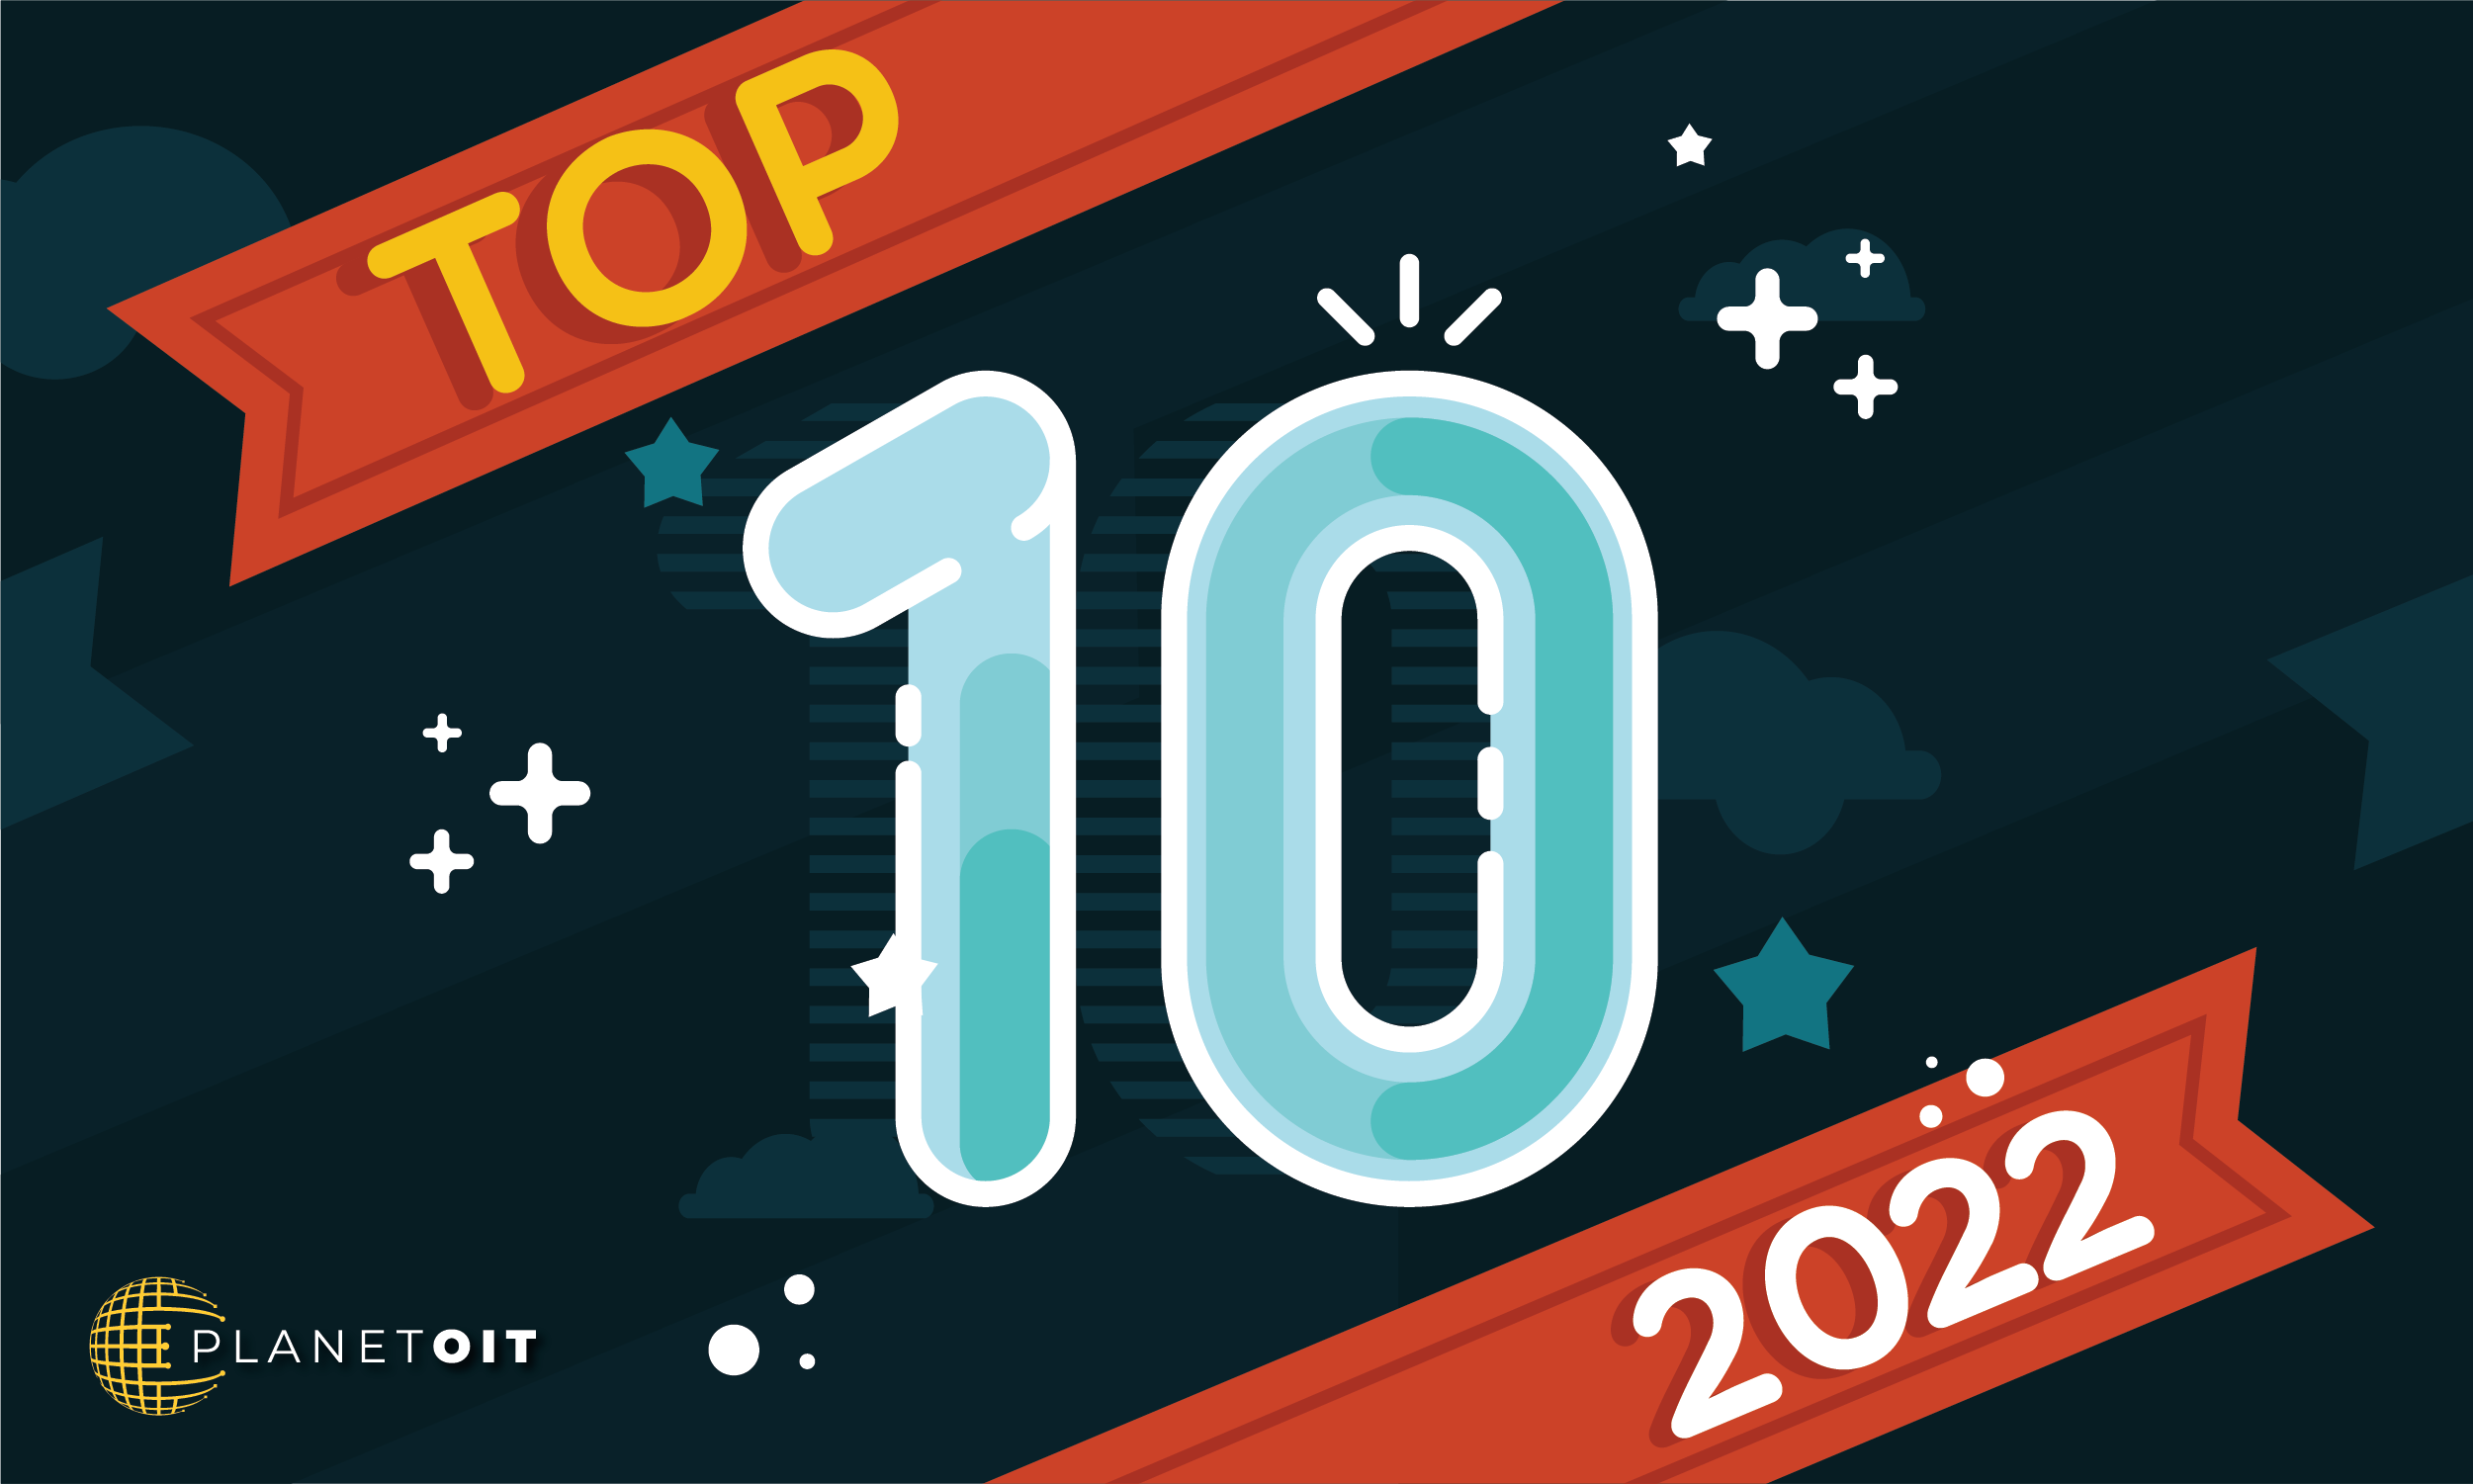 Festive banner reading "Top 10 2022" with PlanetOIT logo at lower left corner